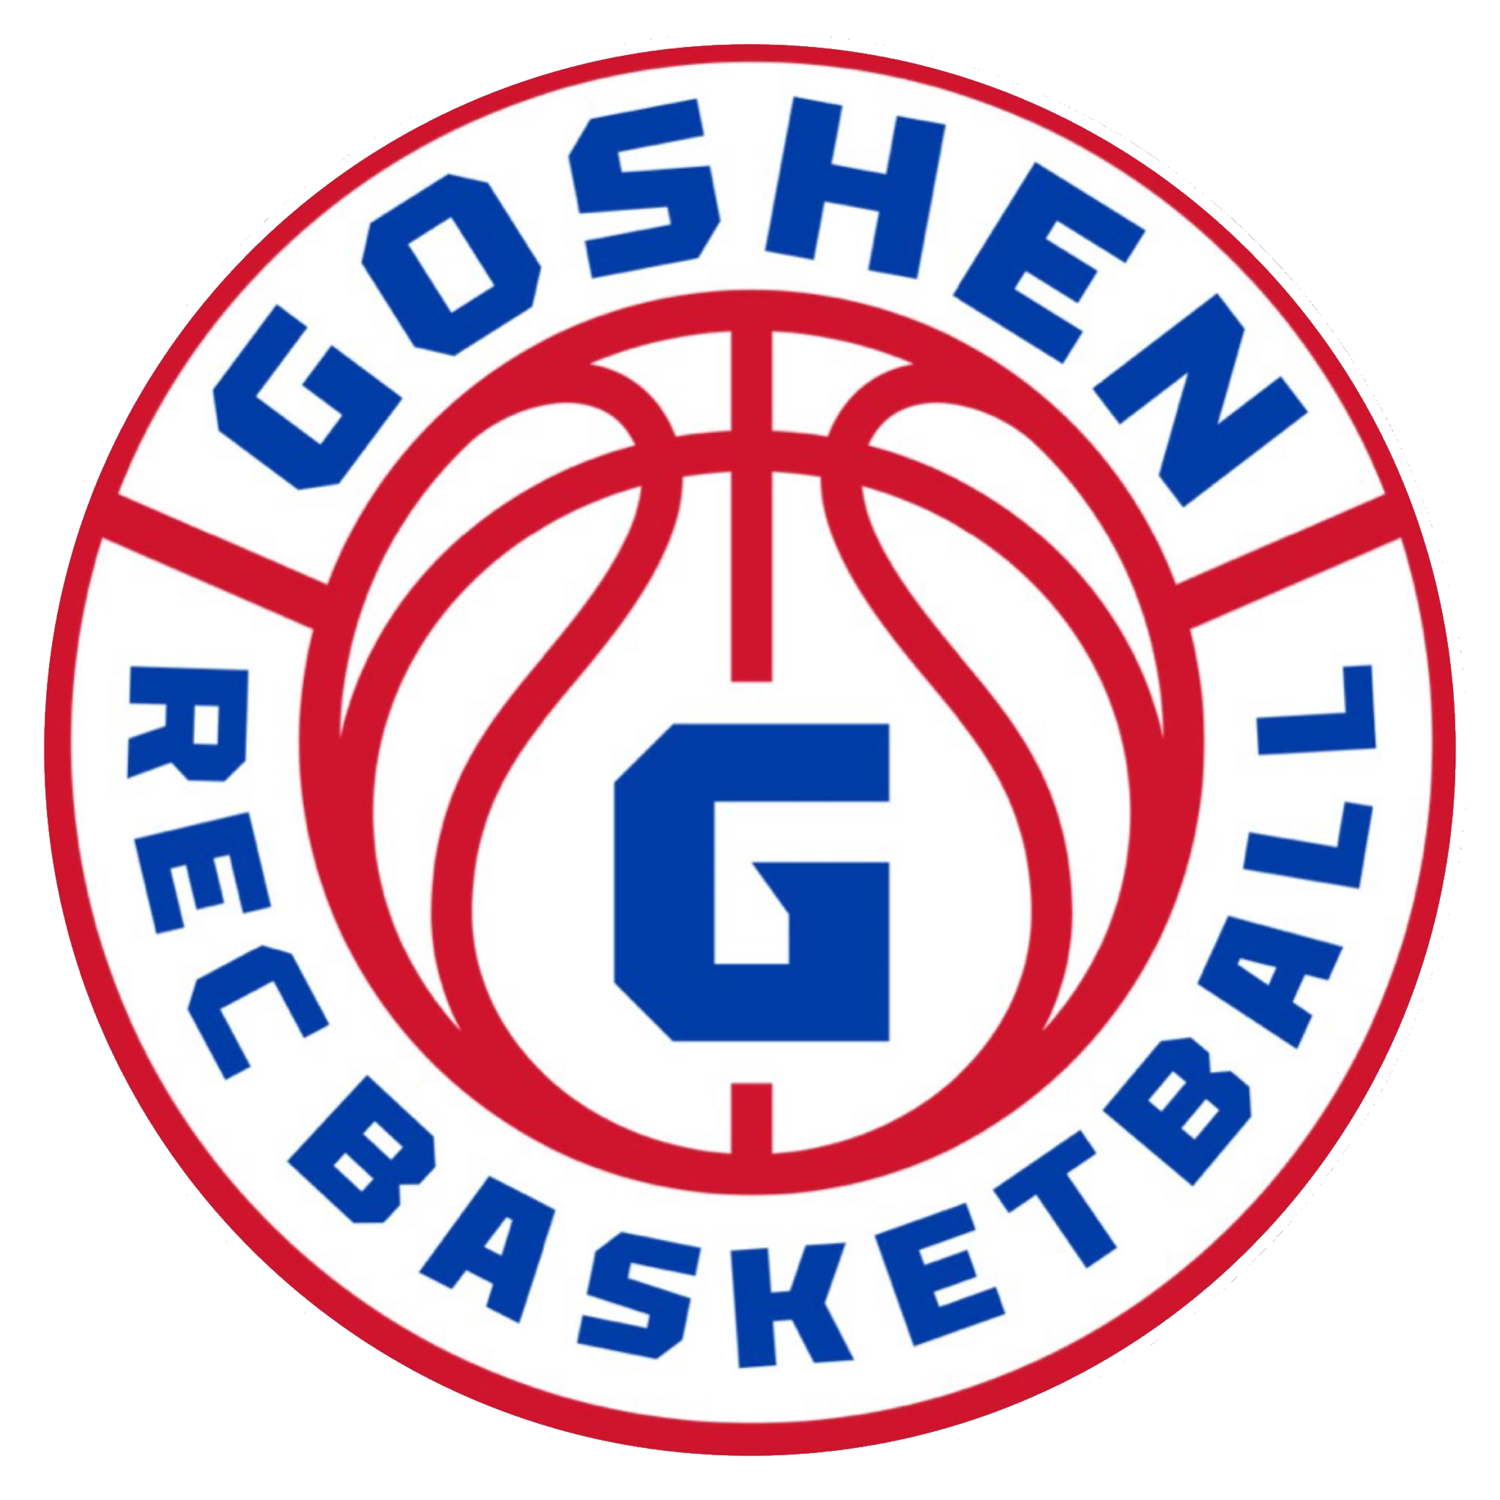 GOSHEN REC BASKETBALL